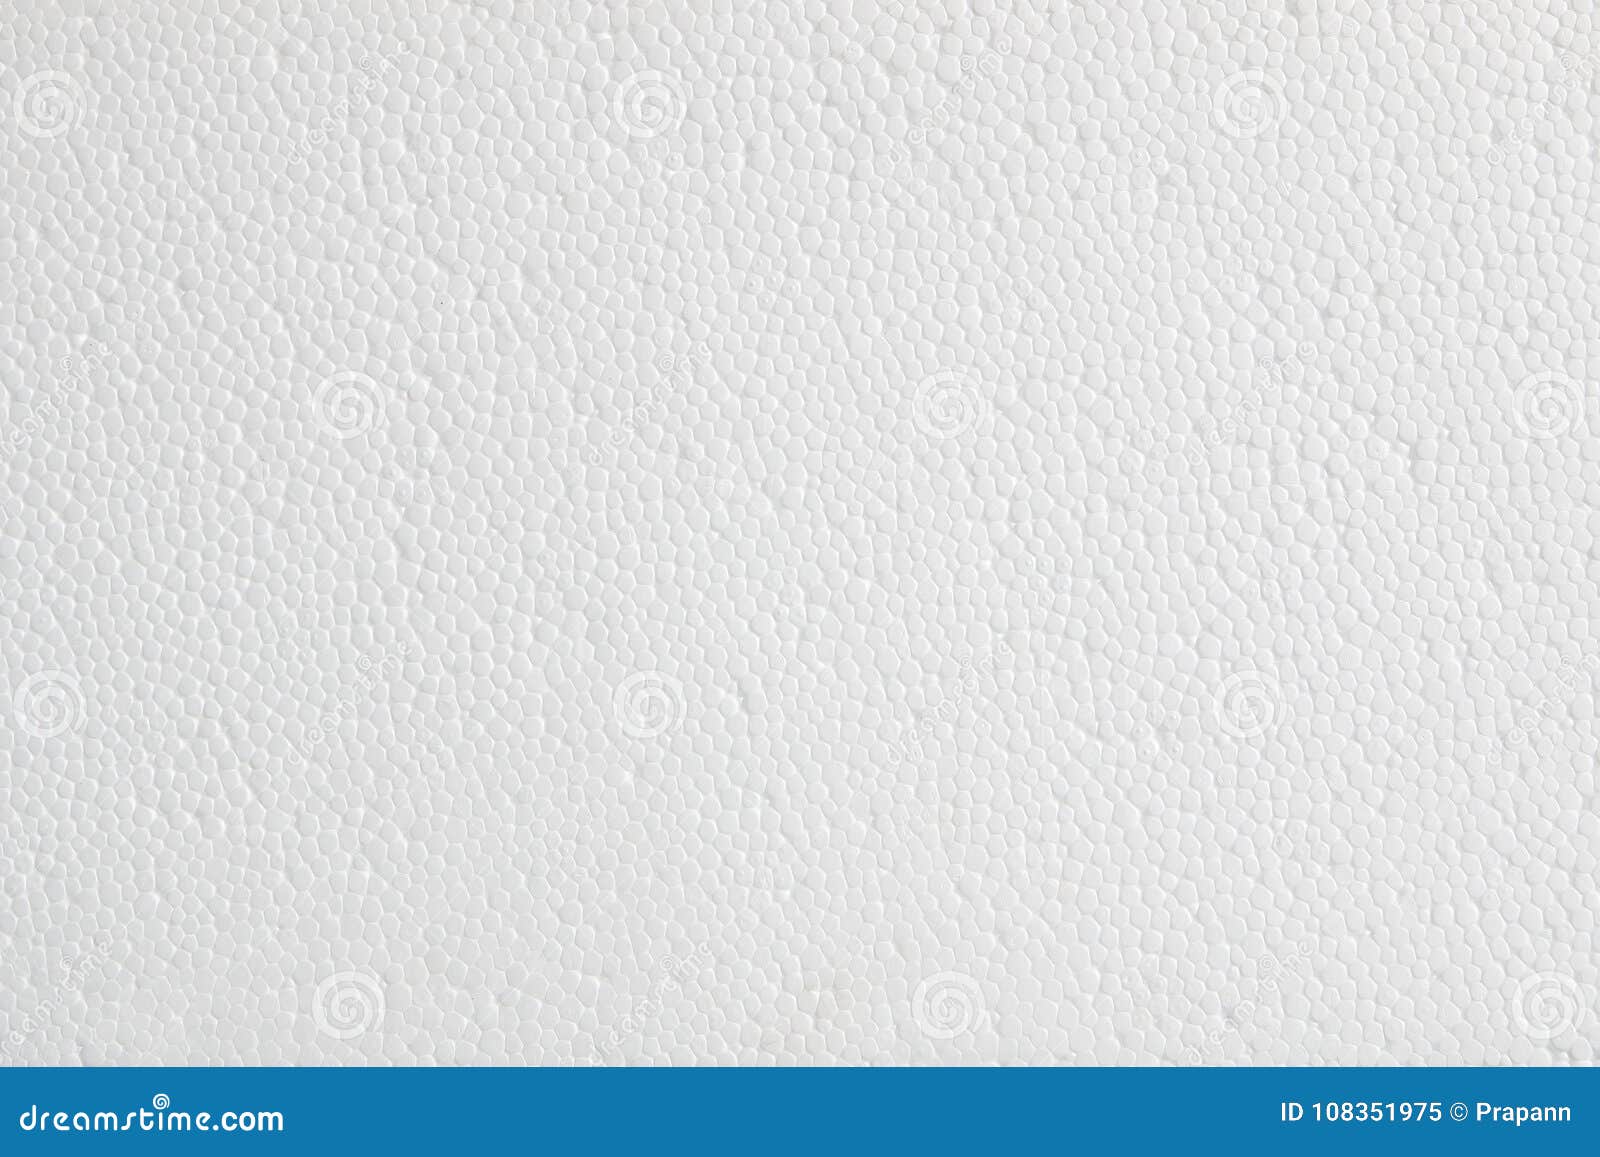 White Foam Plastic Texture background Stock Photo